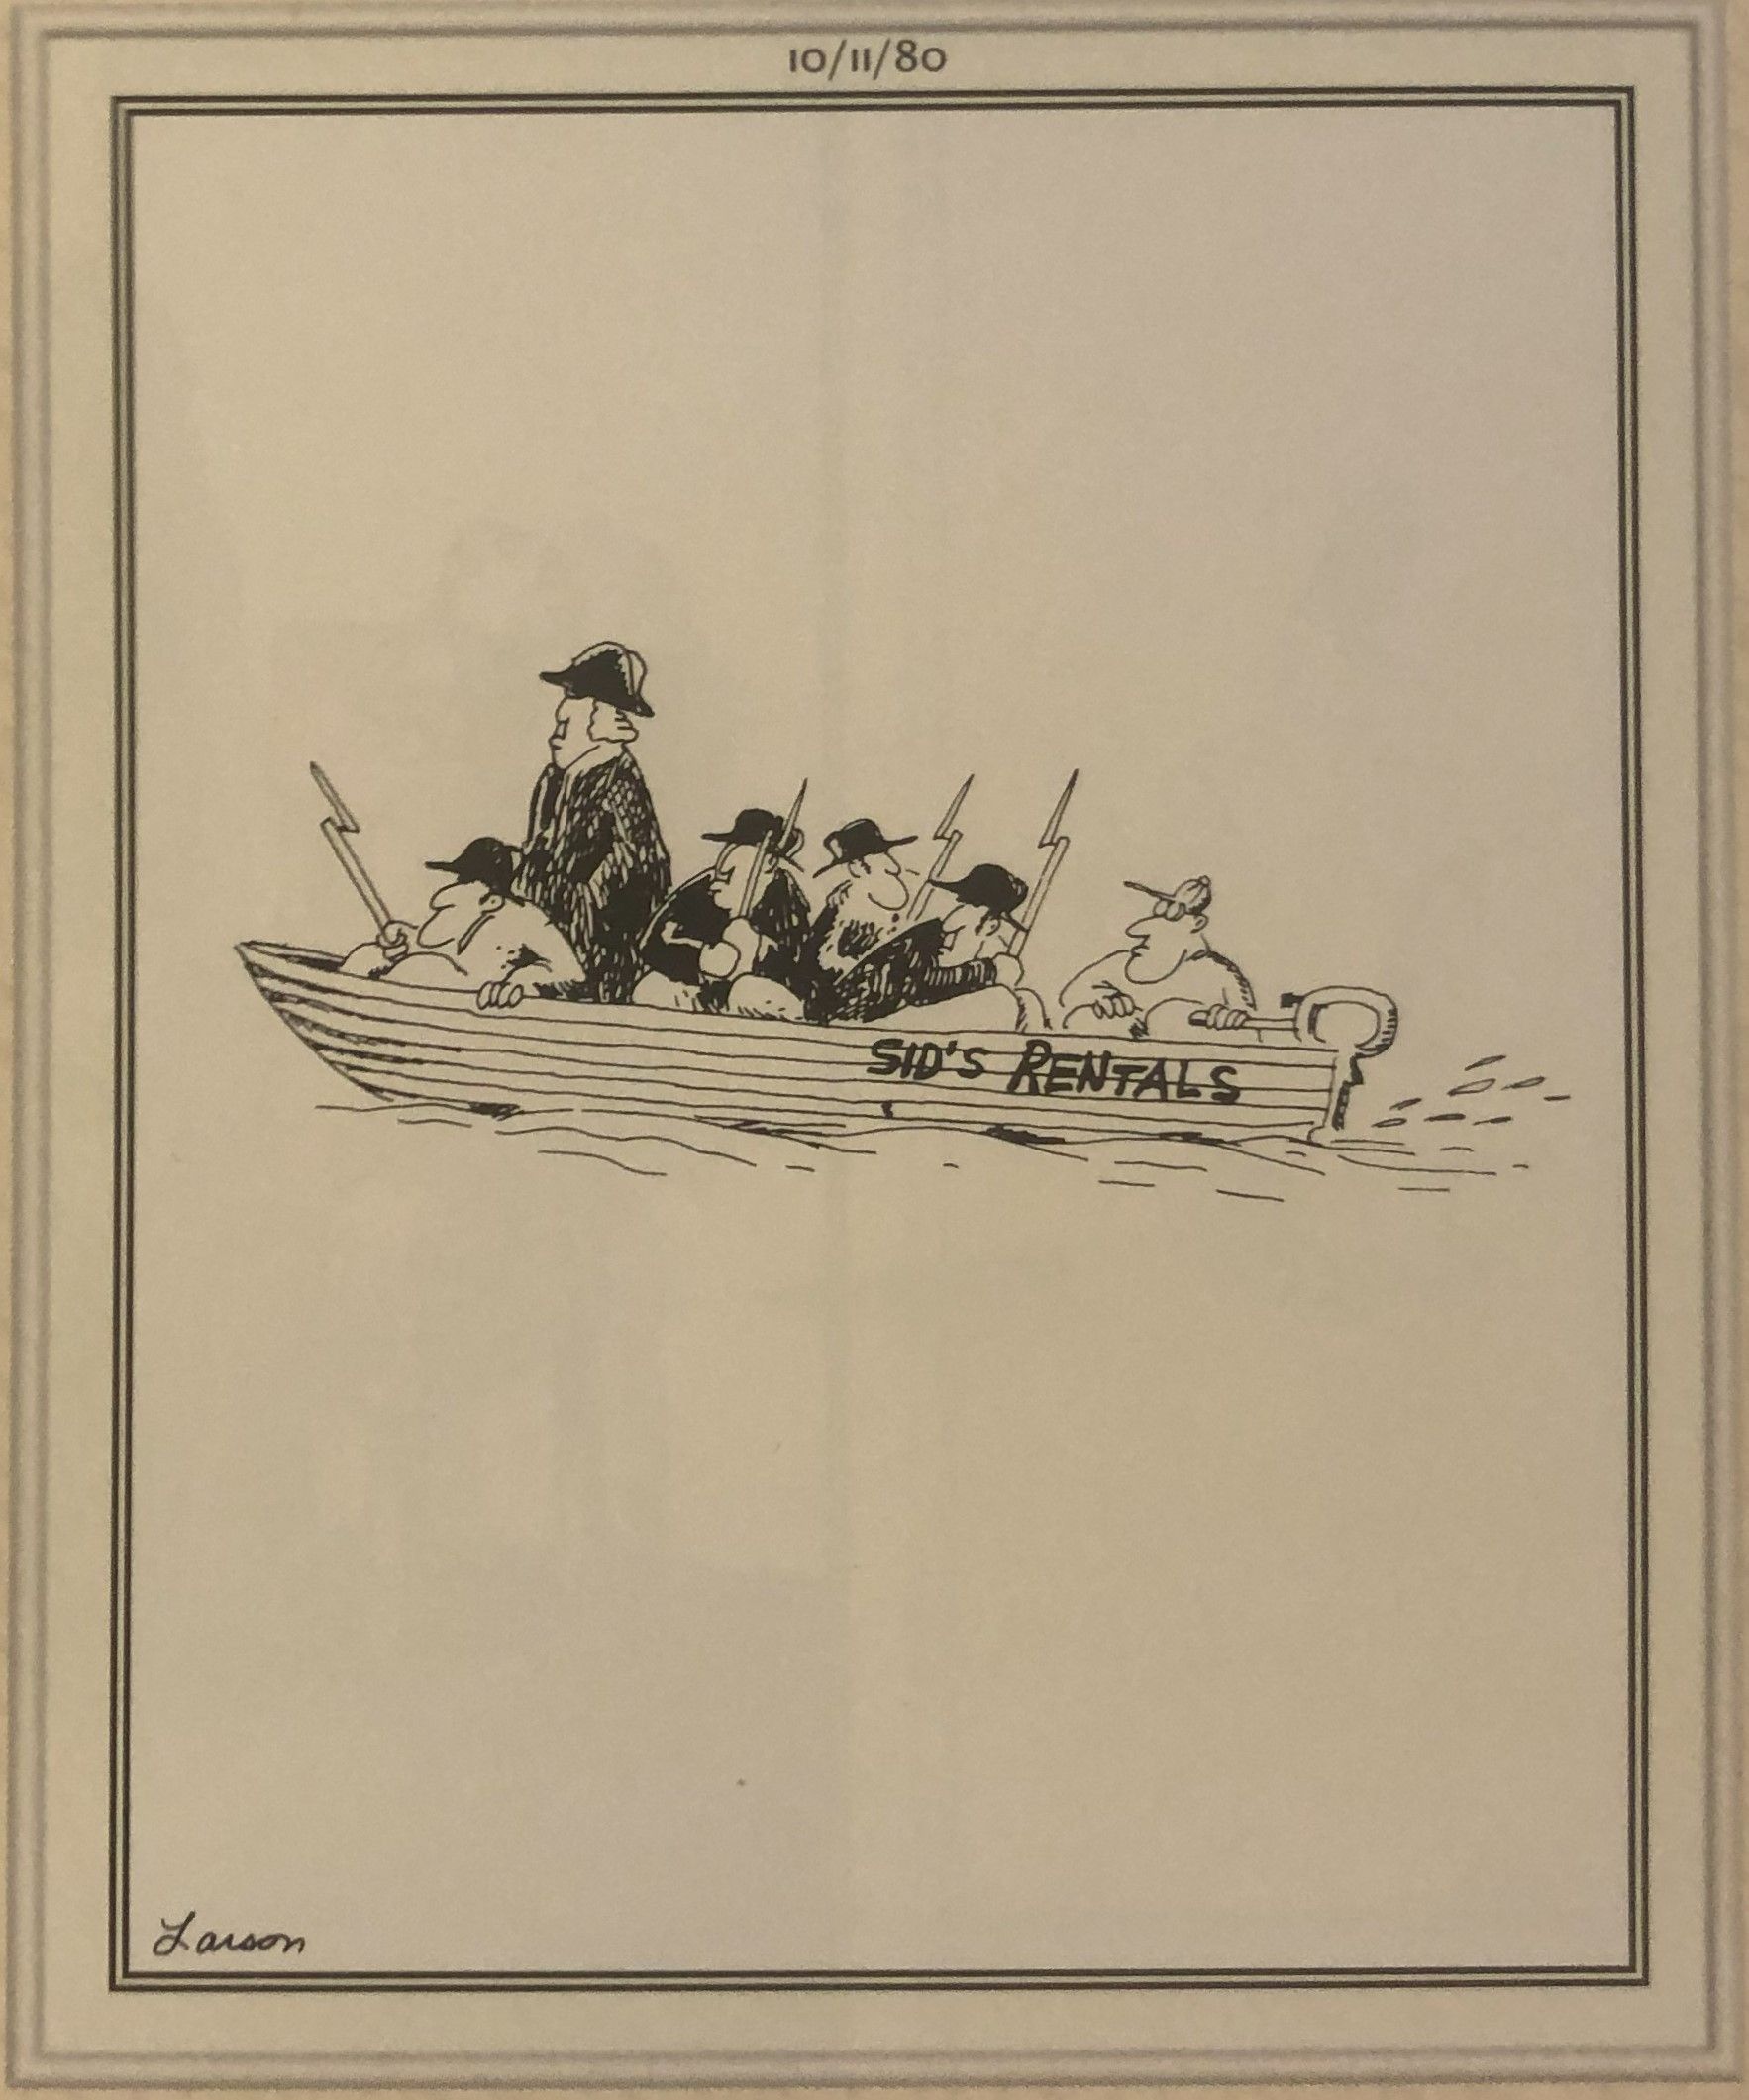 The Far Side, Gary Larson's rendition of Washington crossing the Delaware, hiring 